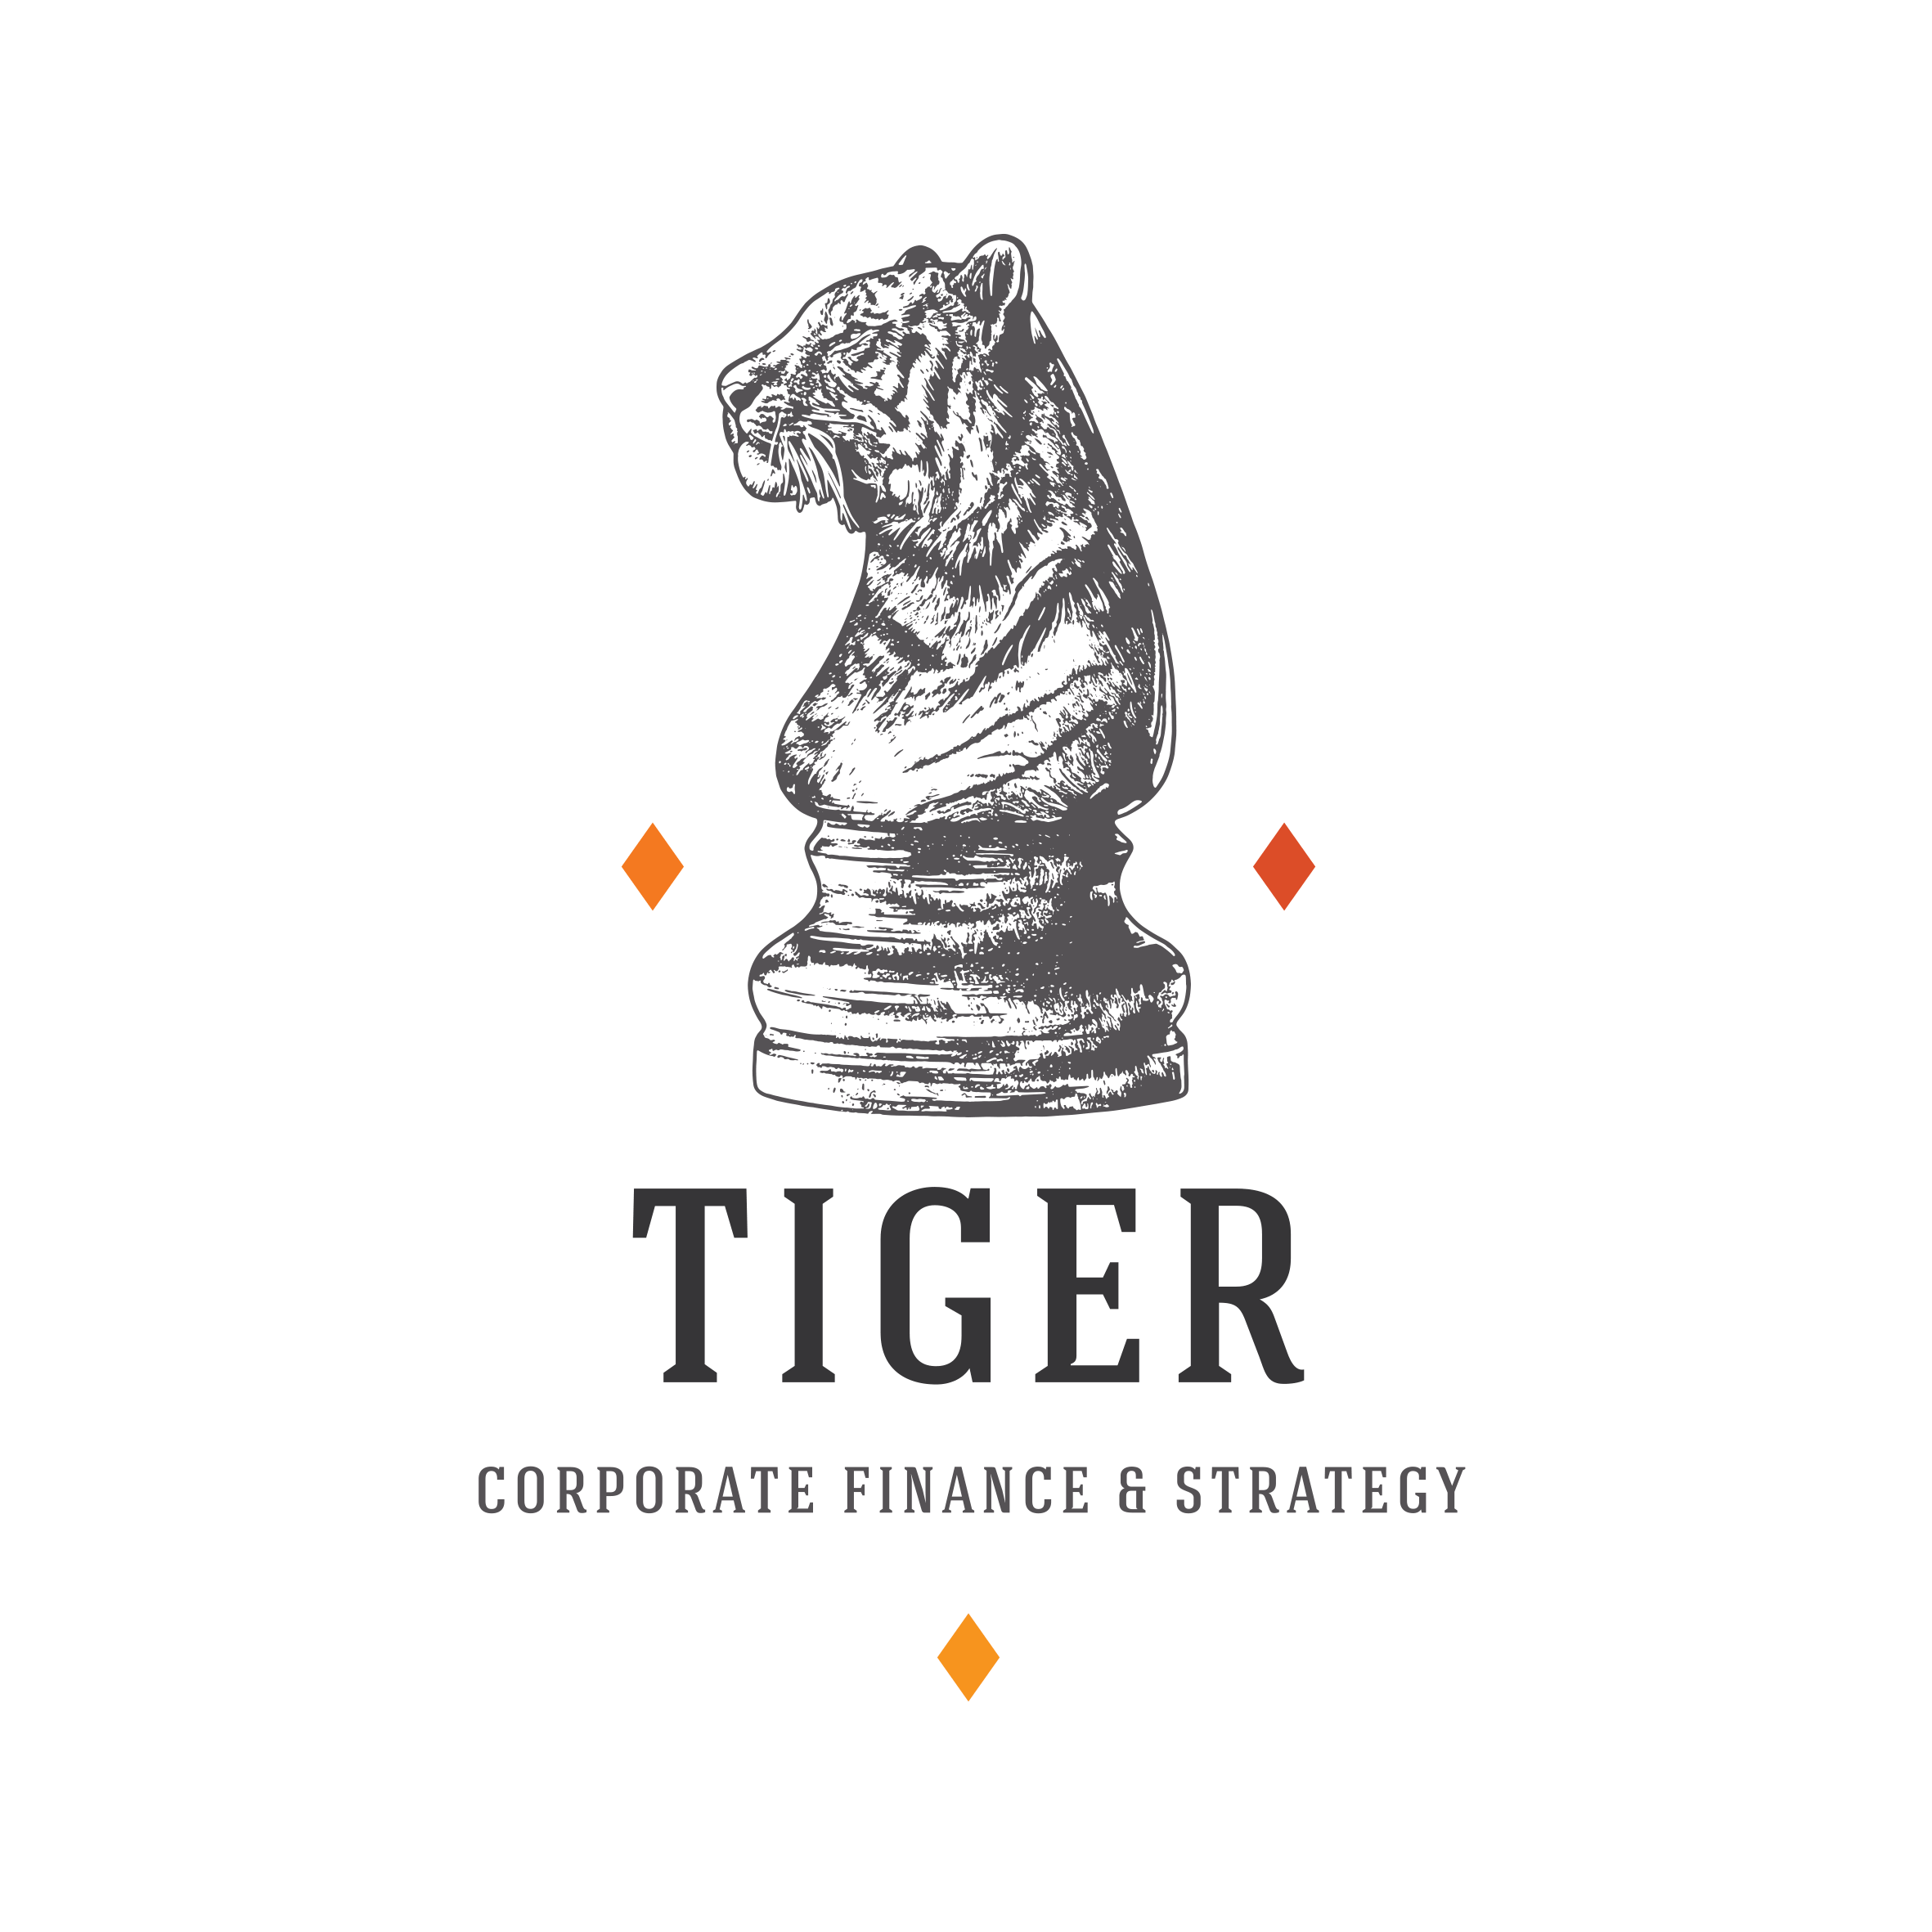 Logo Tiger Corporate Finance & Strategy